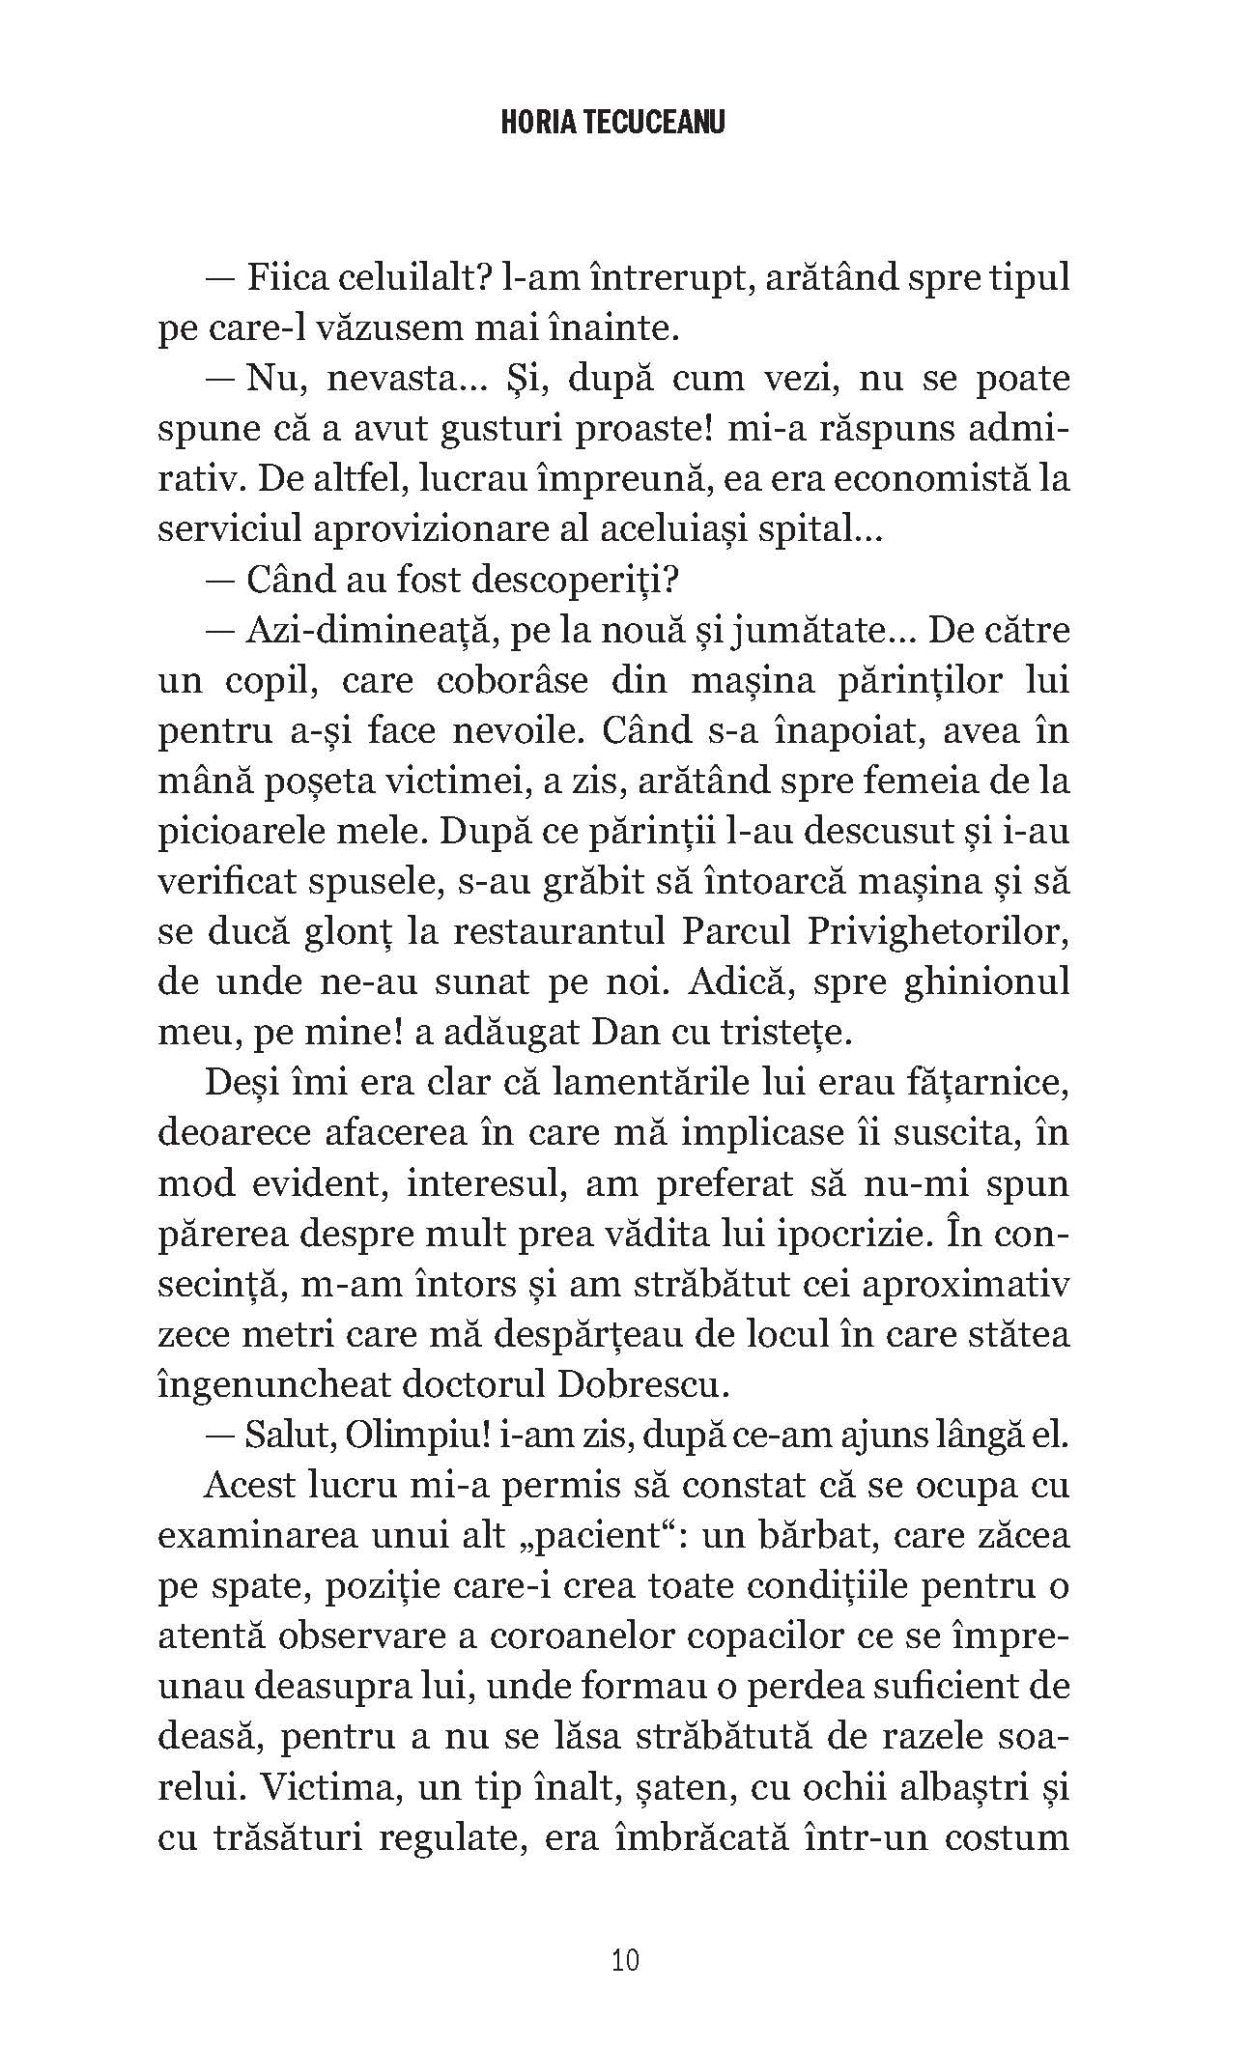 Capitanul Apostolescu si Mobilul. Ancheta Continua - Ed. digitala - PDF - Publisol.ro